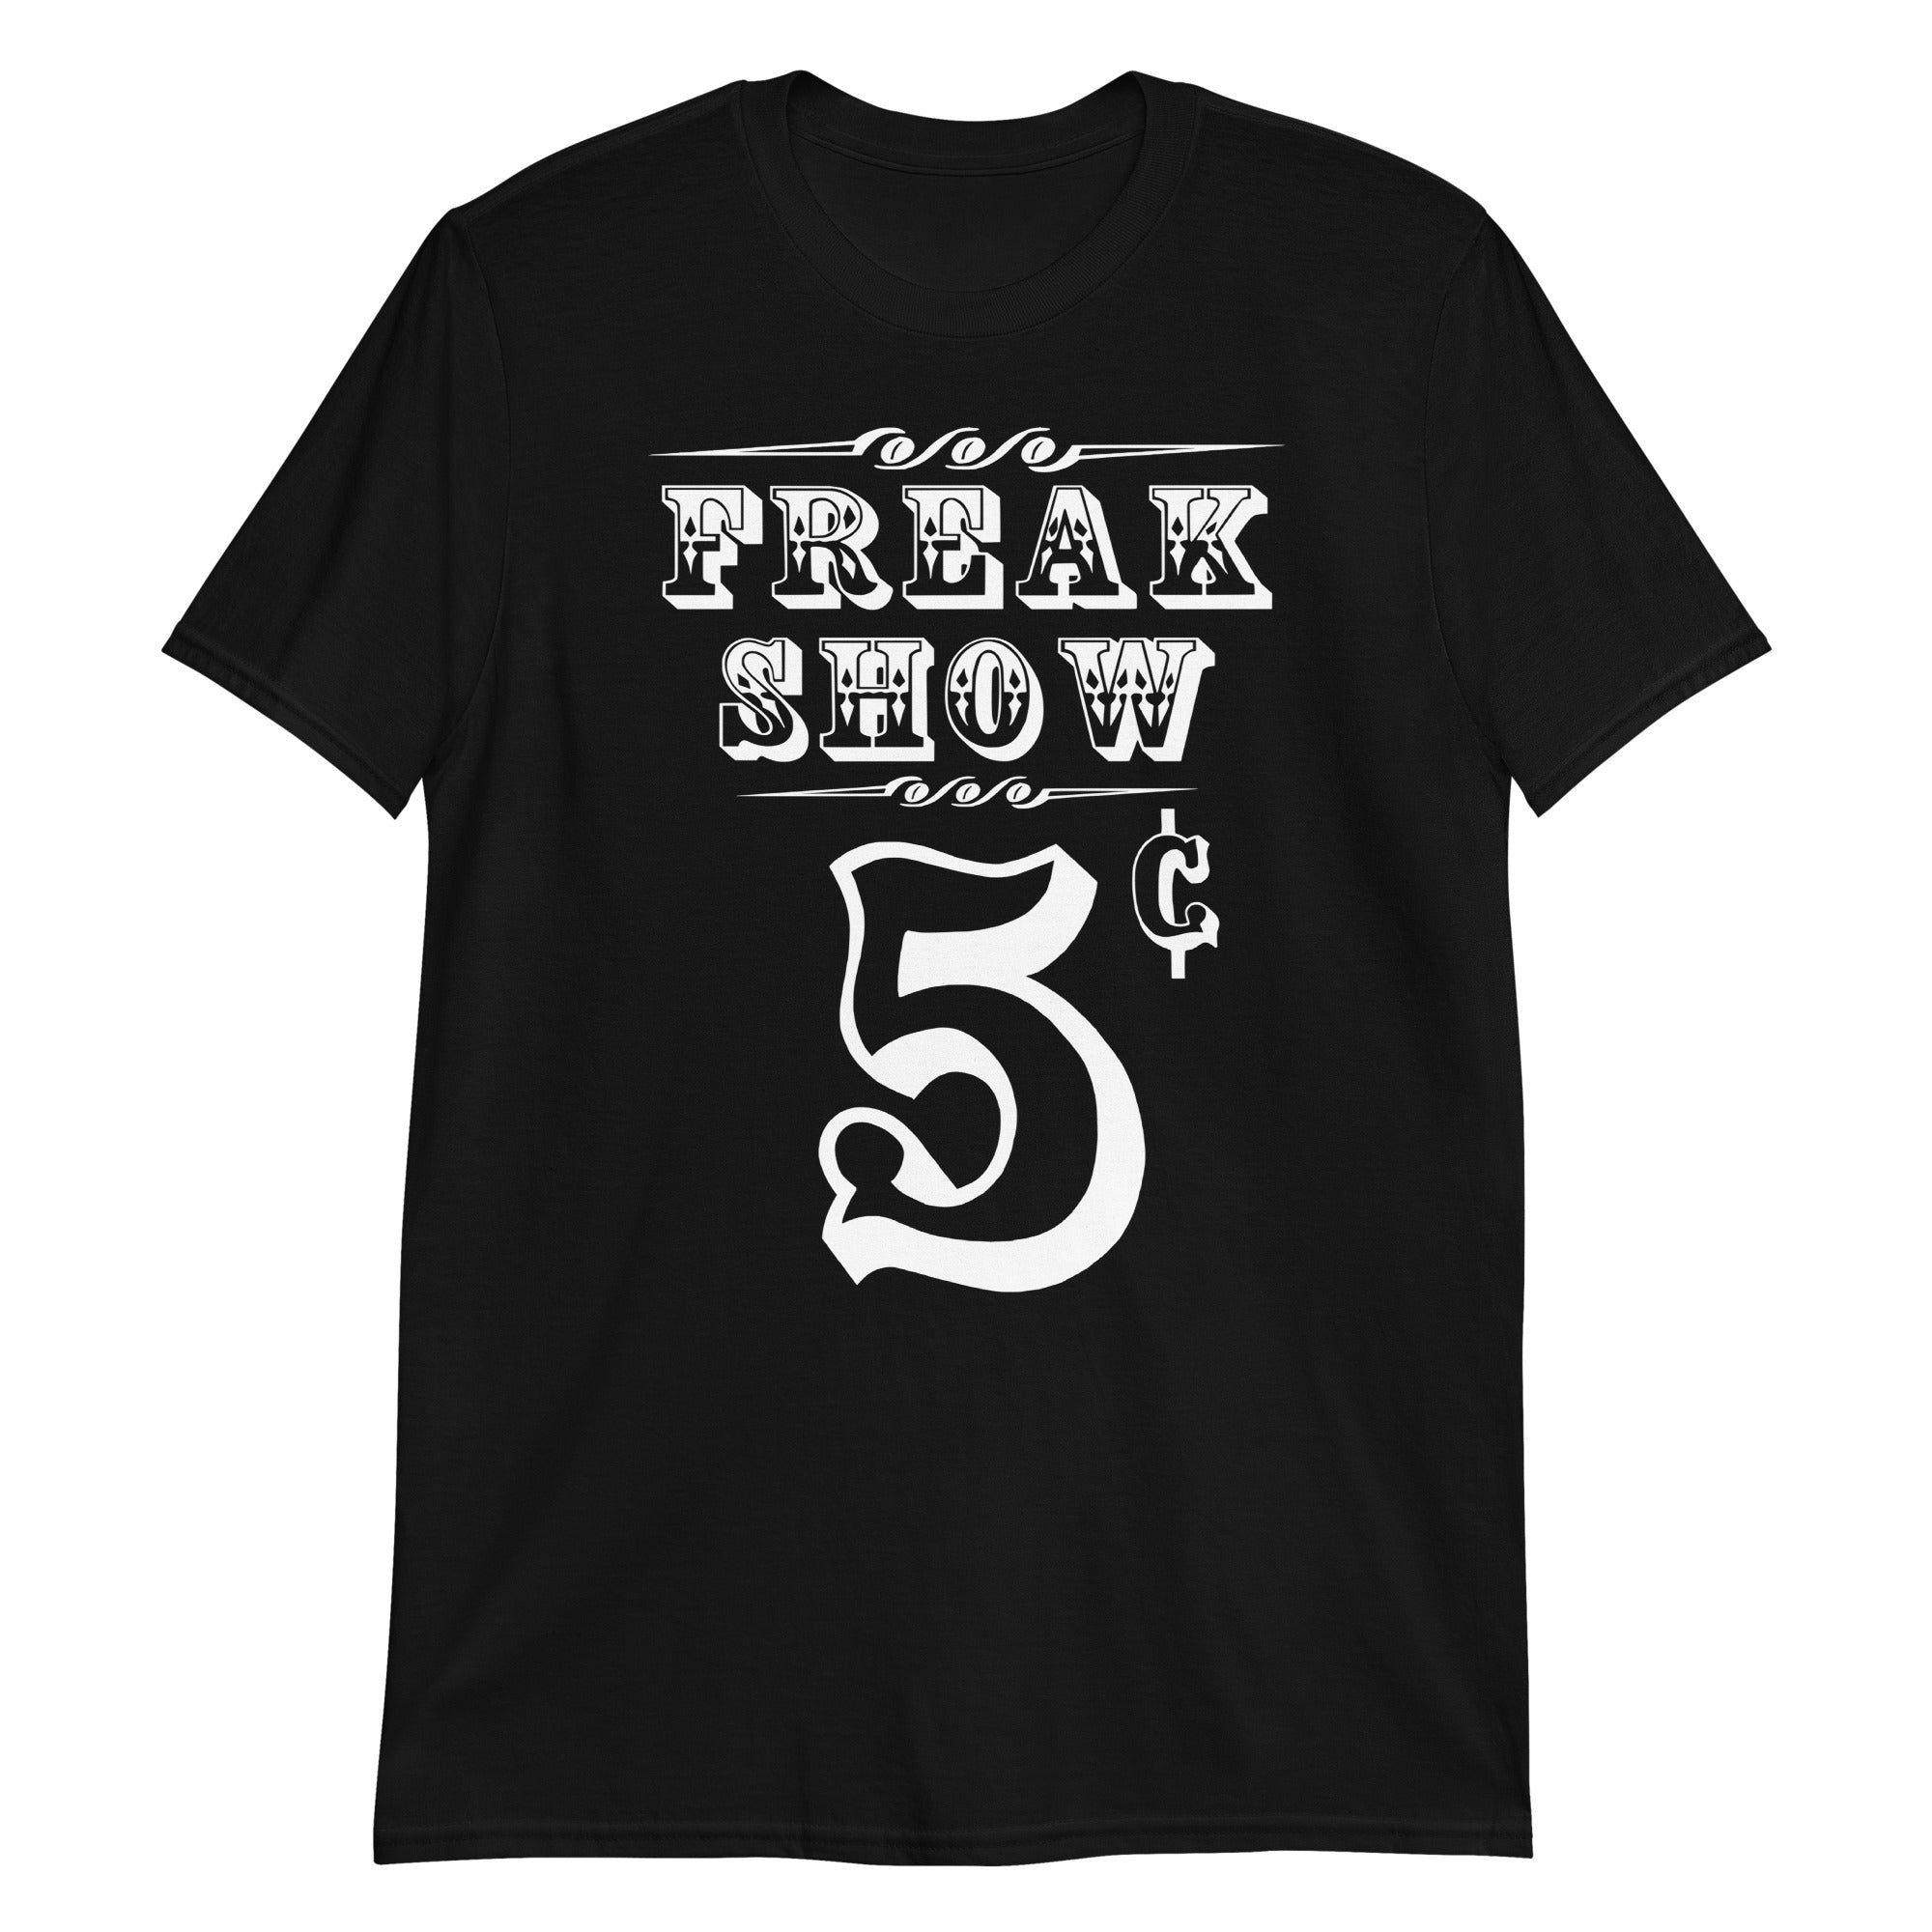 Carnival Freak Show 5 Cents Men's Short Sleeve T-Shirt - Edge of Life Designs